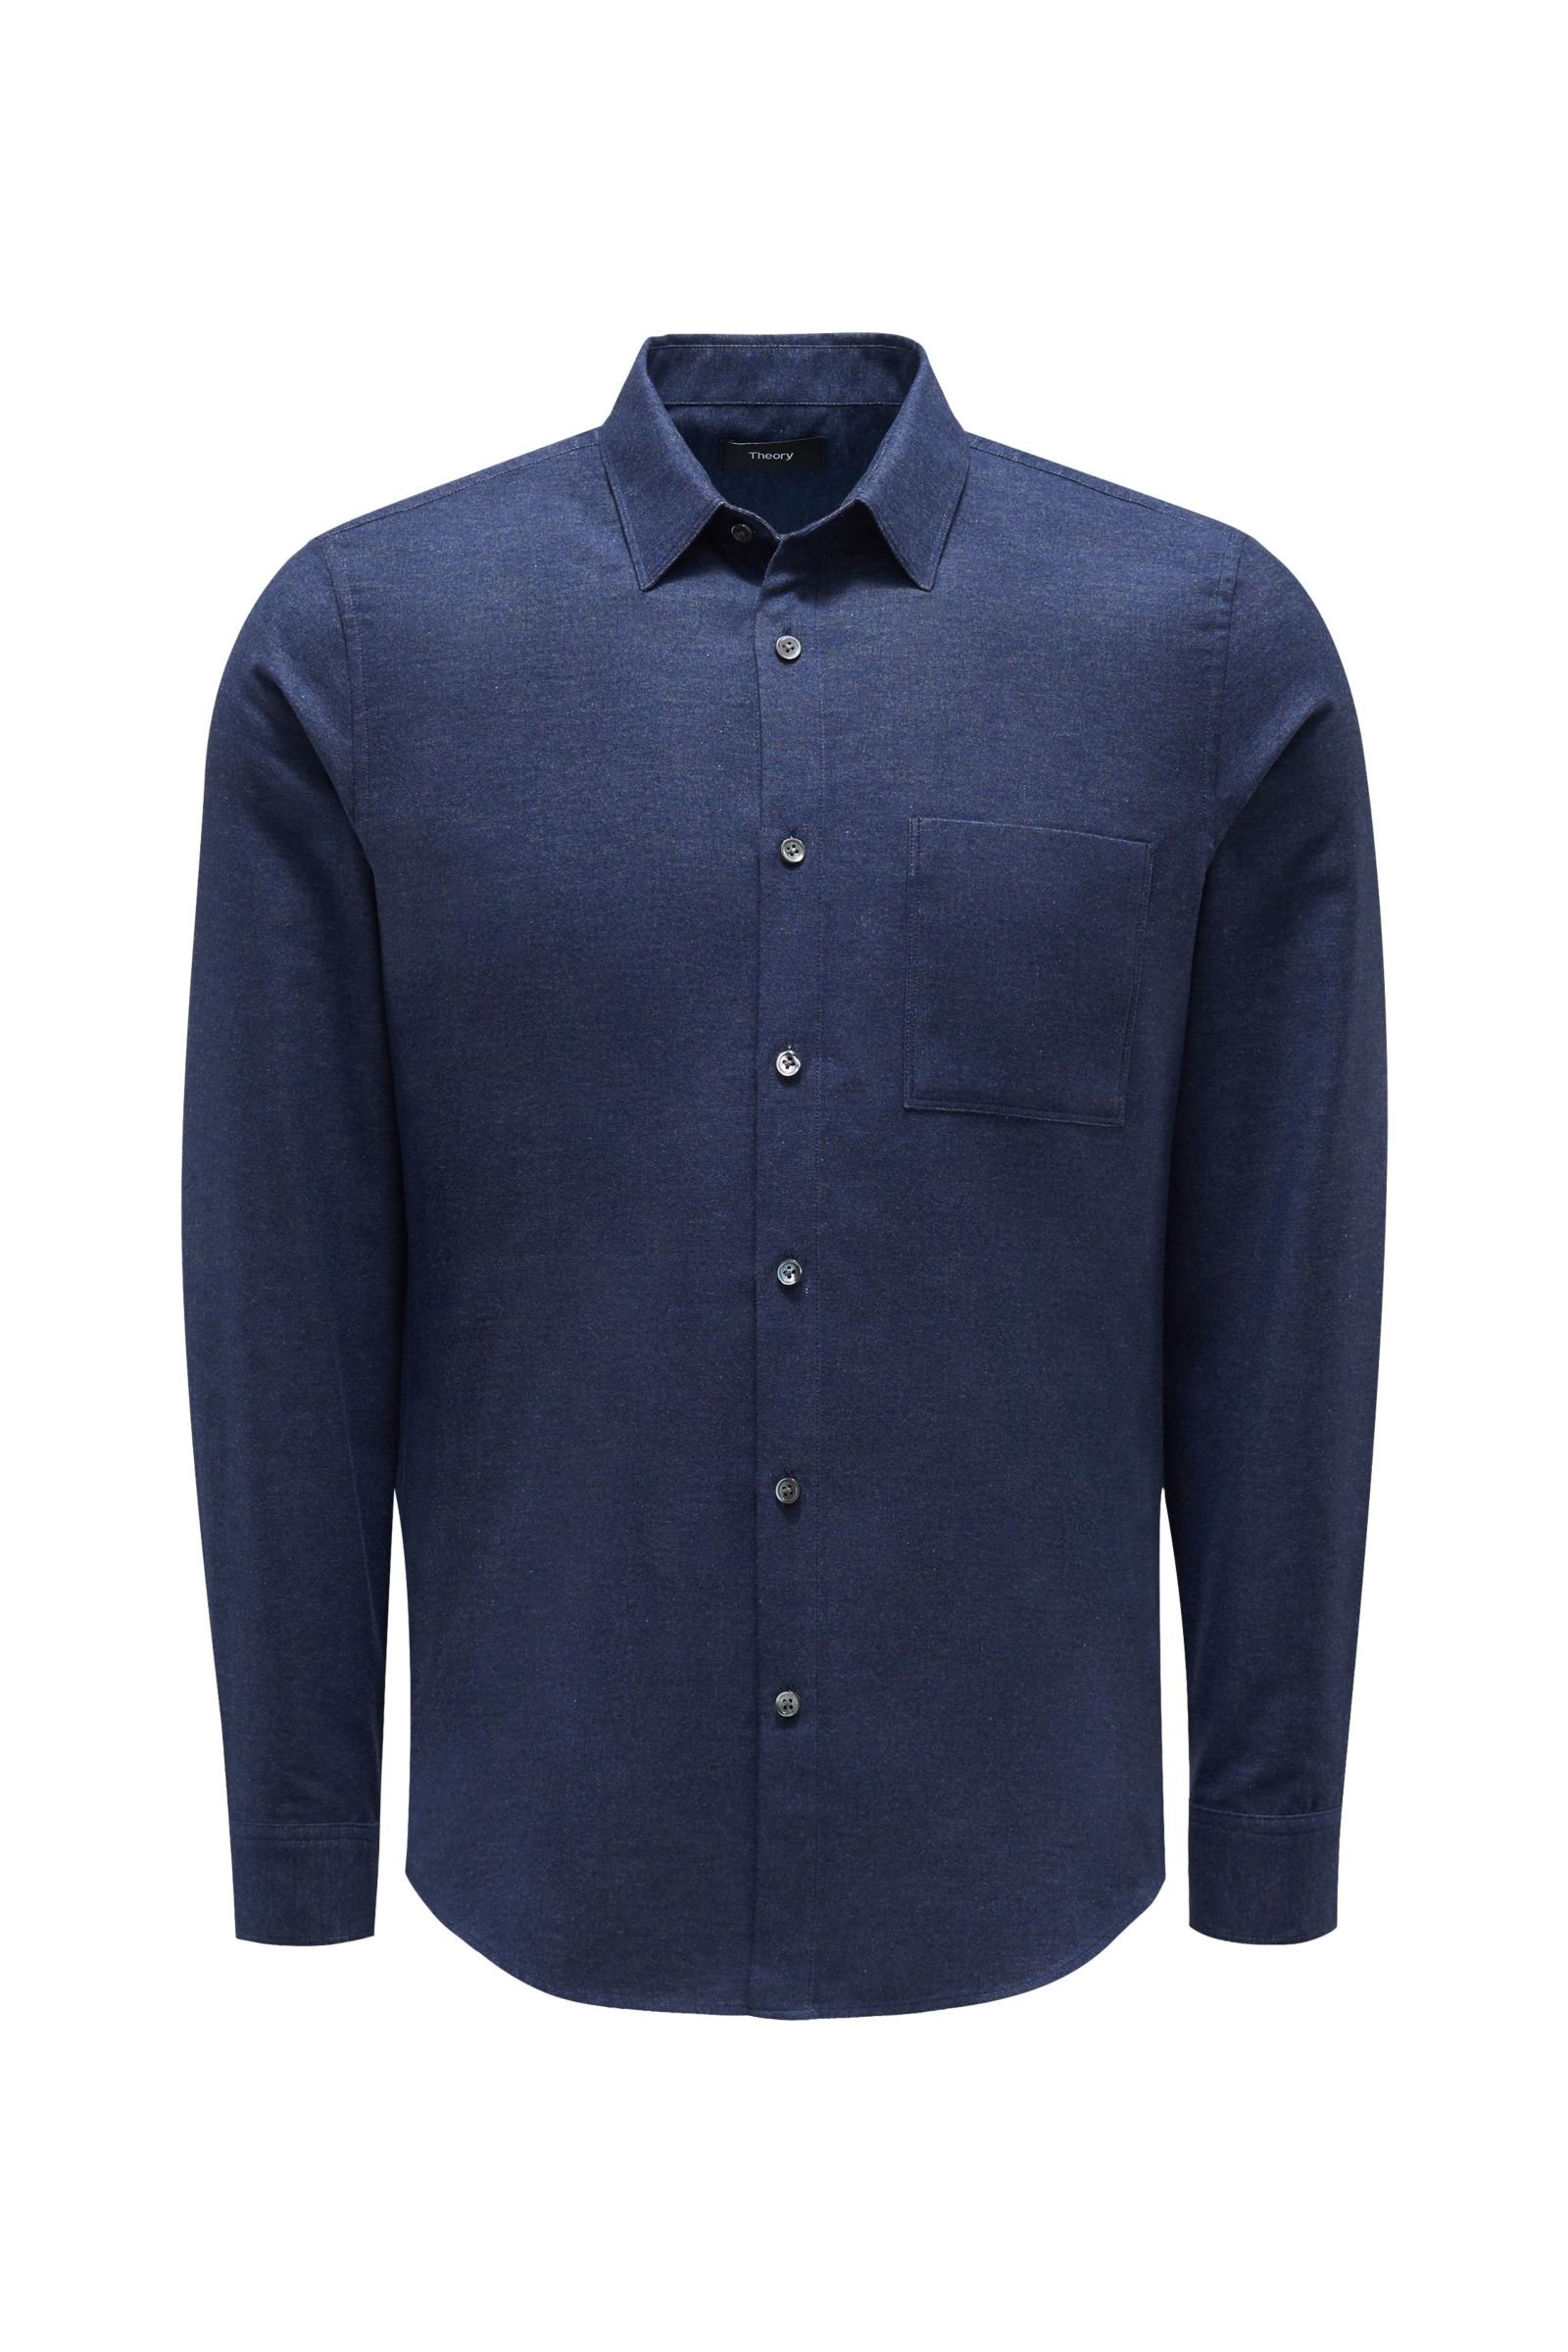 Flannel shirt 'Irving' slim collar navy